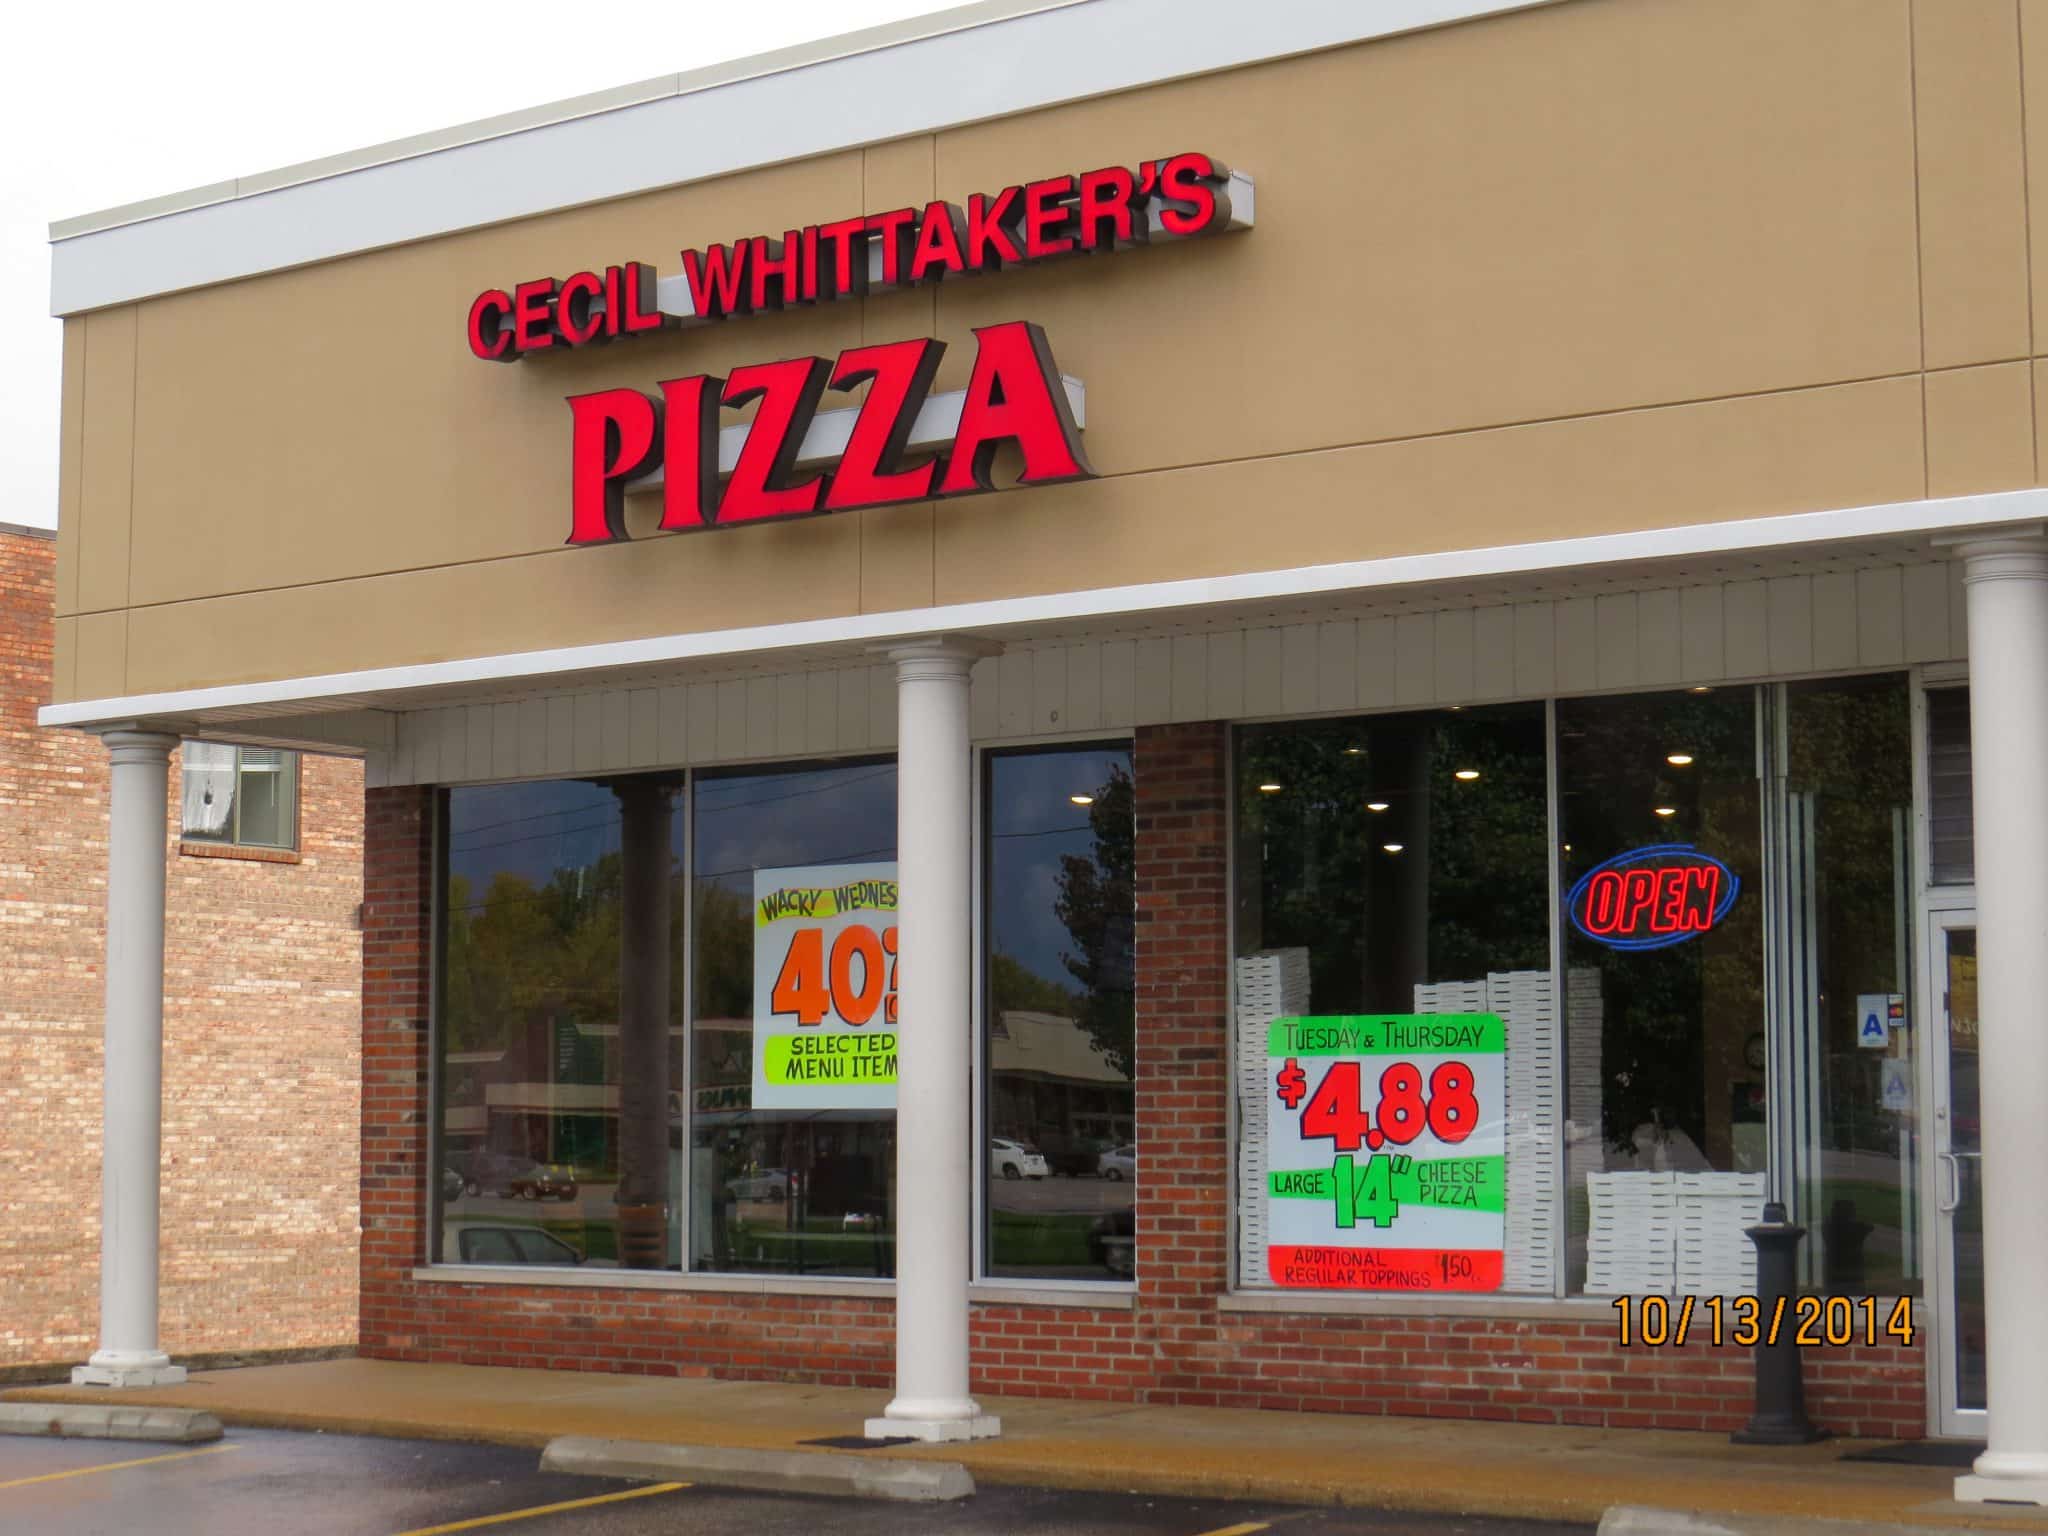 Cecil Whittaker’s Pizza